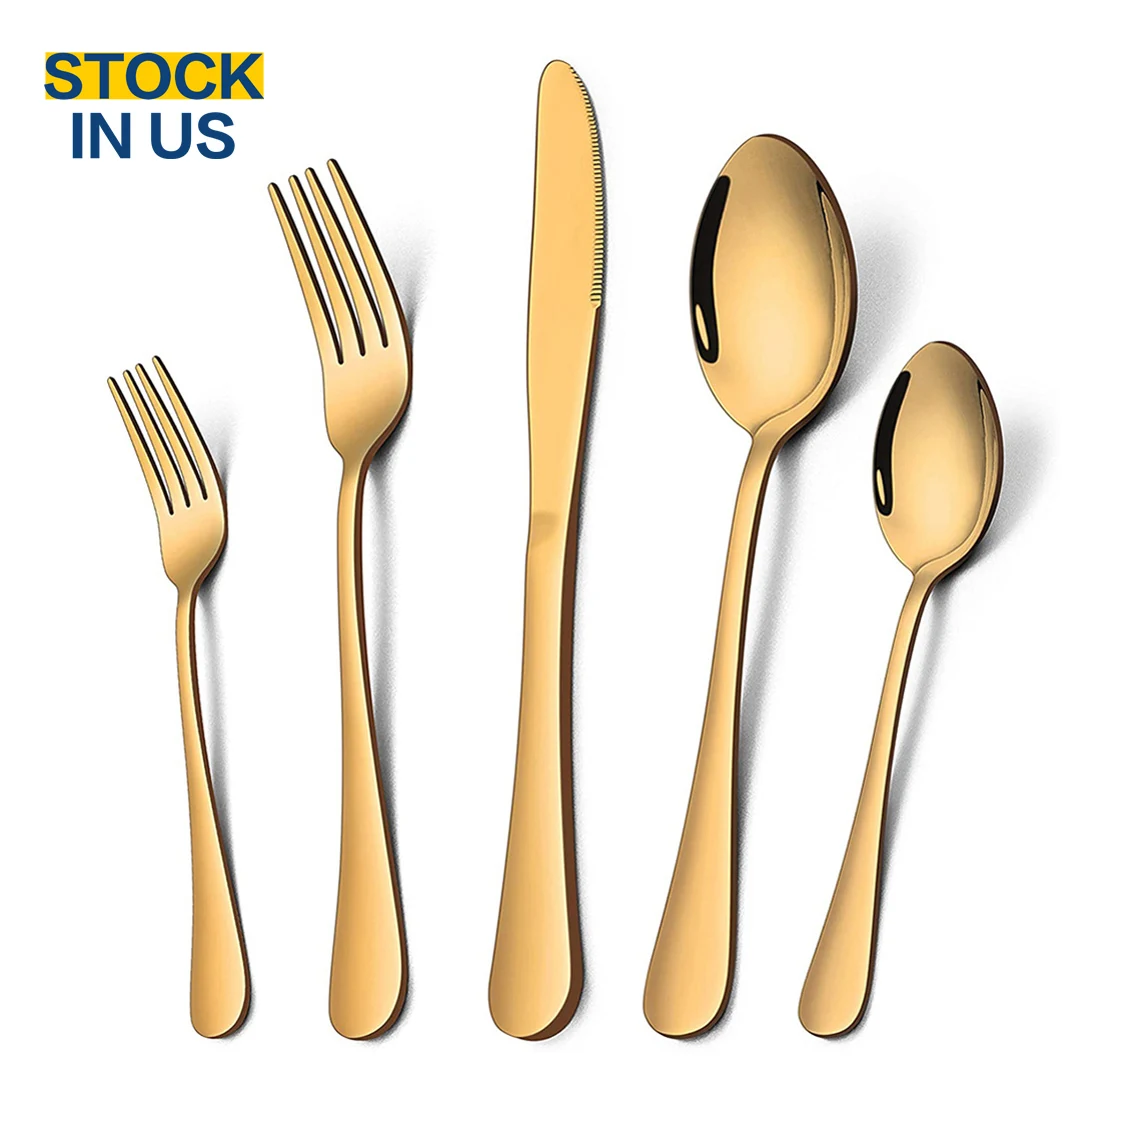 

US STOCKS 20 piece silverware set stainless steel wedding flatware set gold, Silver, black, rose gold, gold